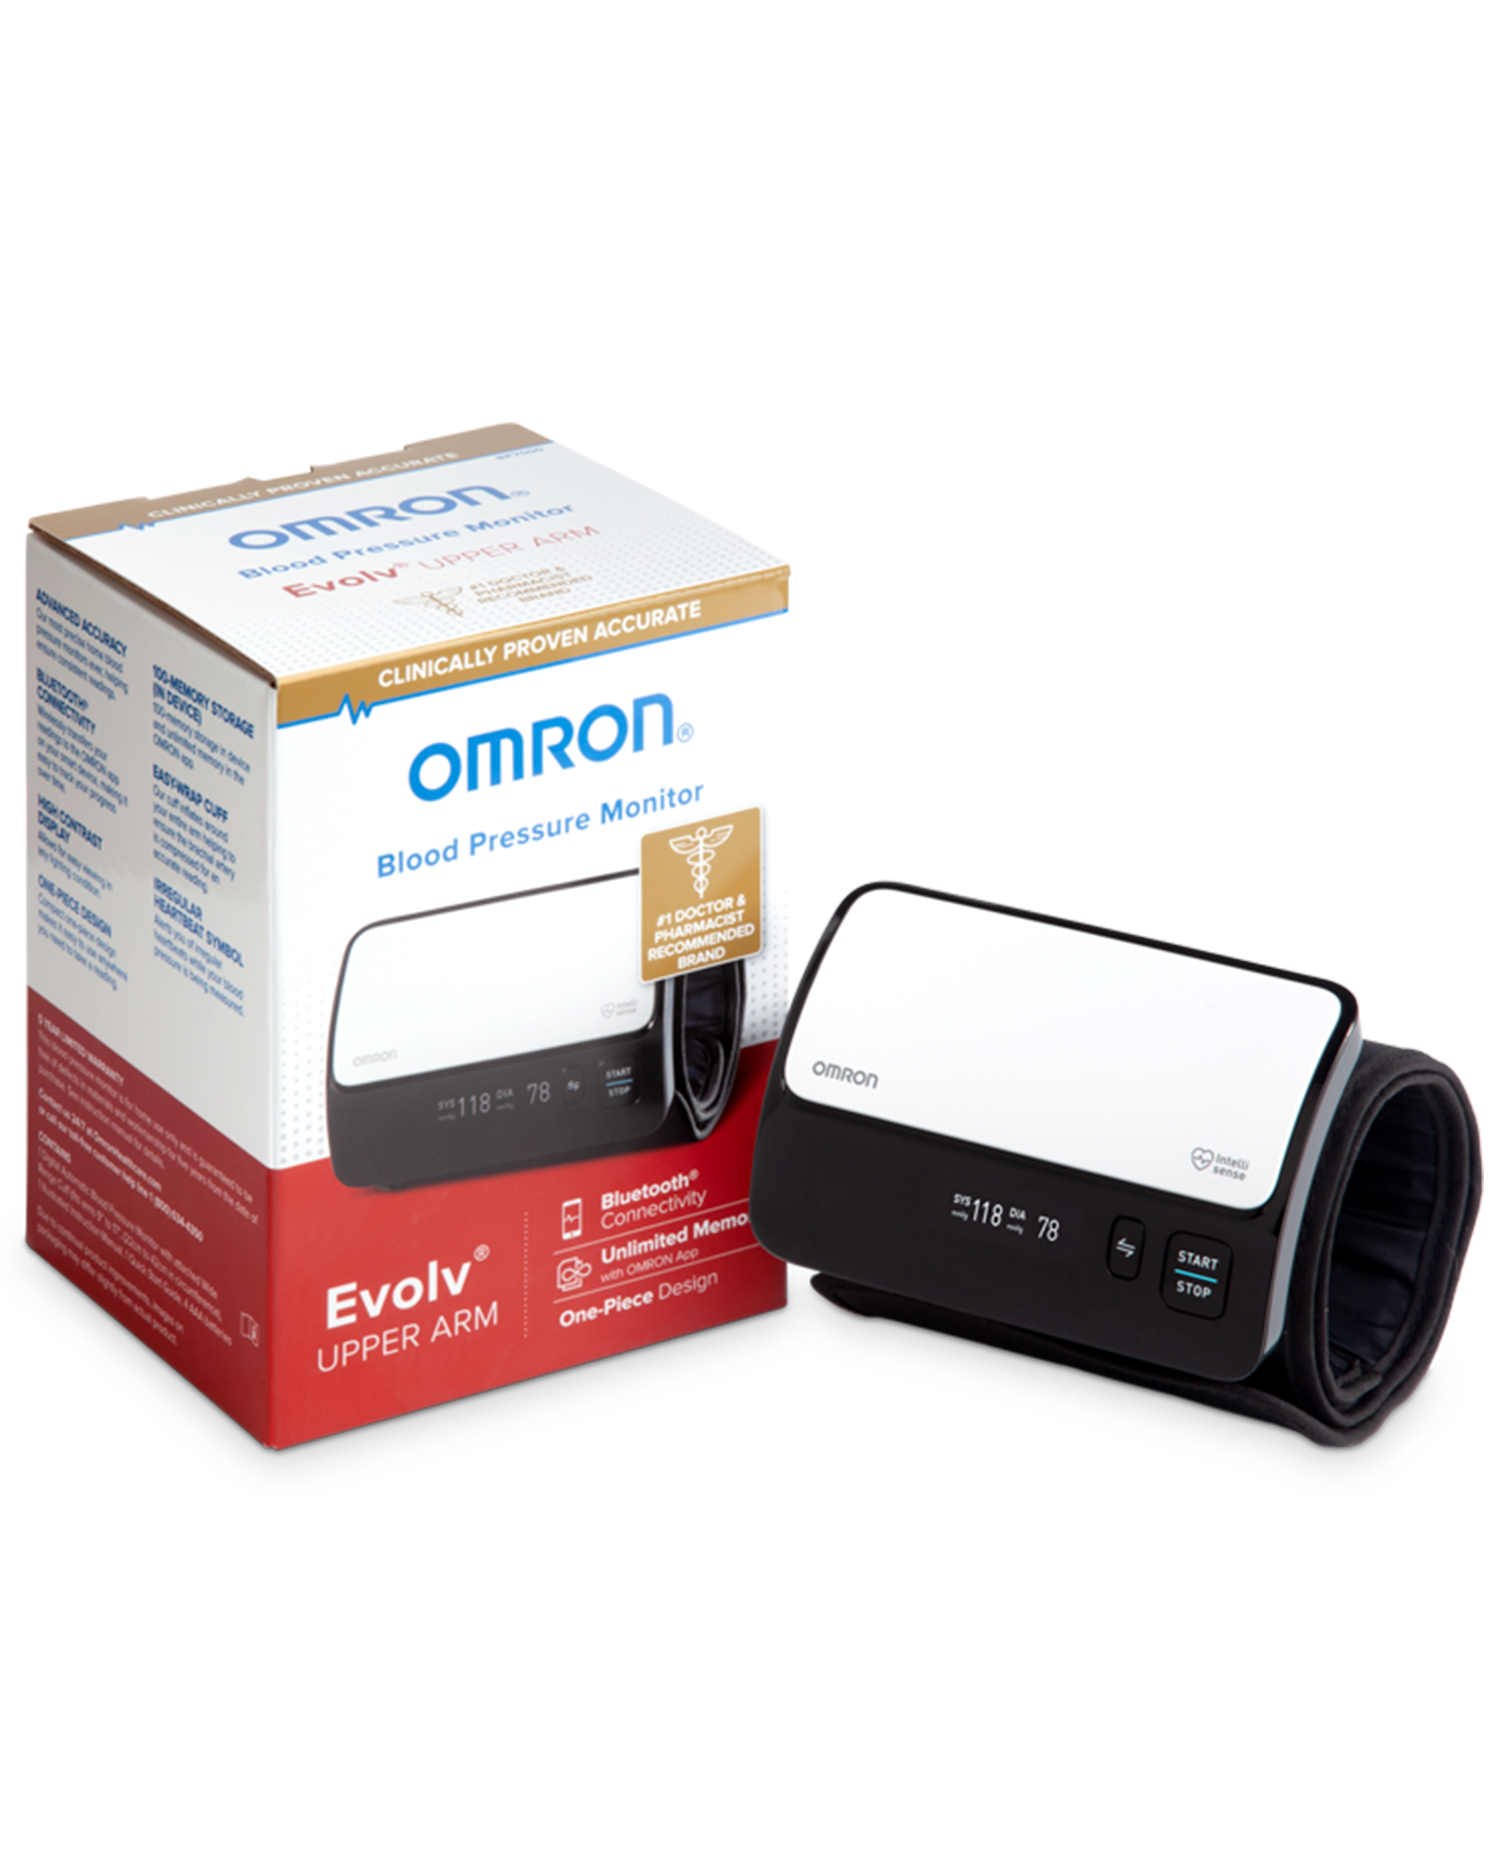 Blood Pressure Monitor Case for Omron Evolv Blood Pressure Monitor Omron  BP7000